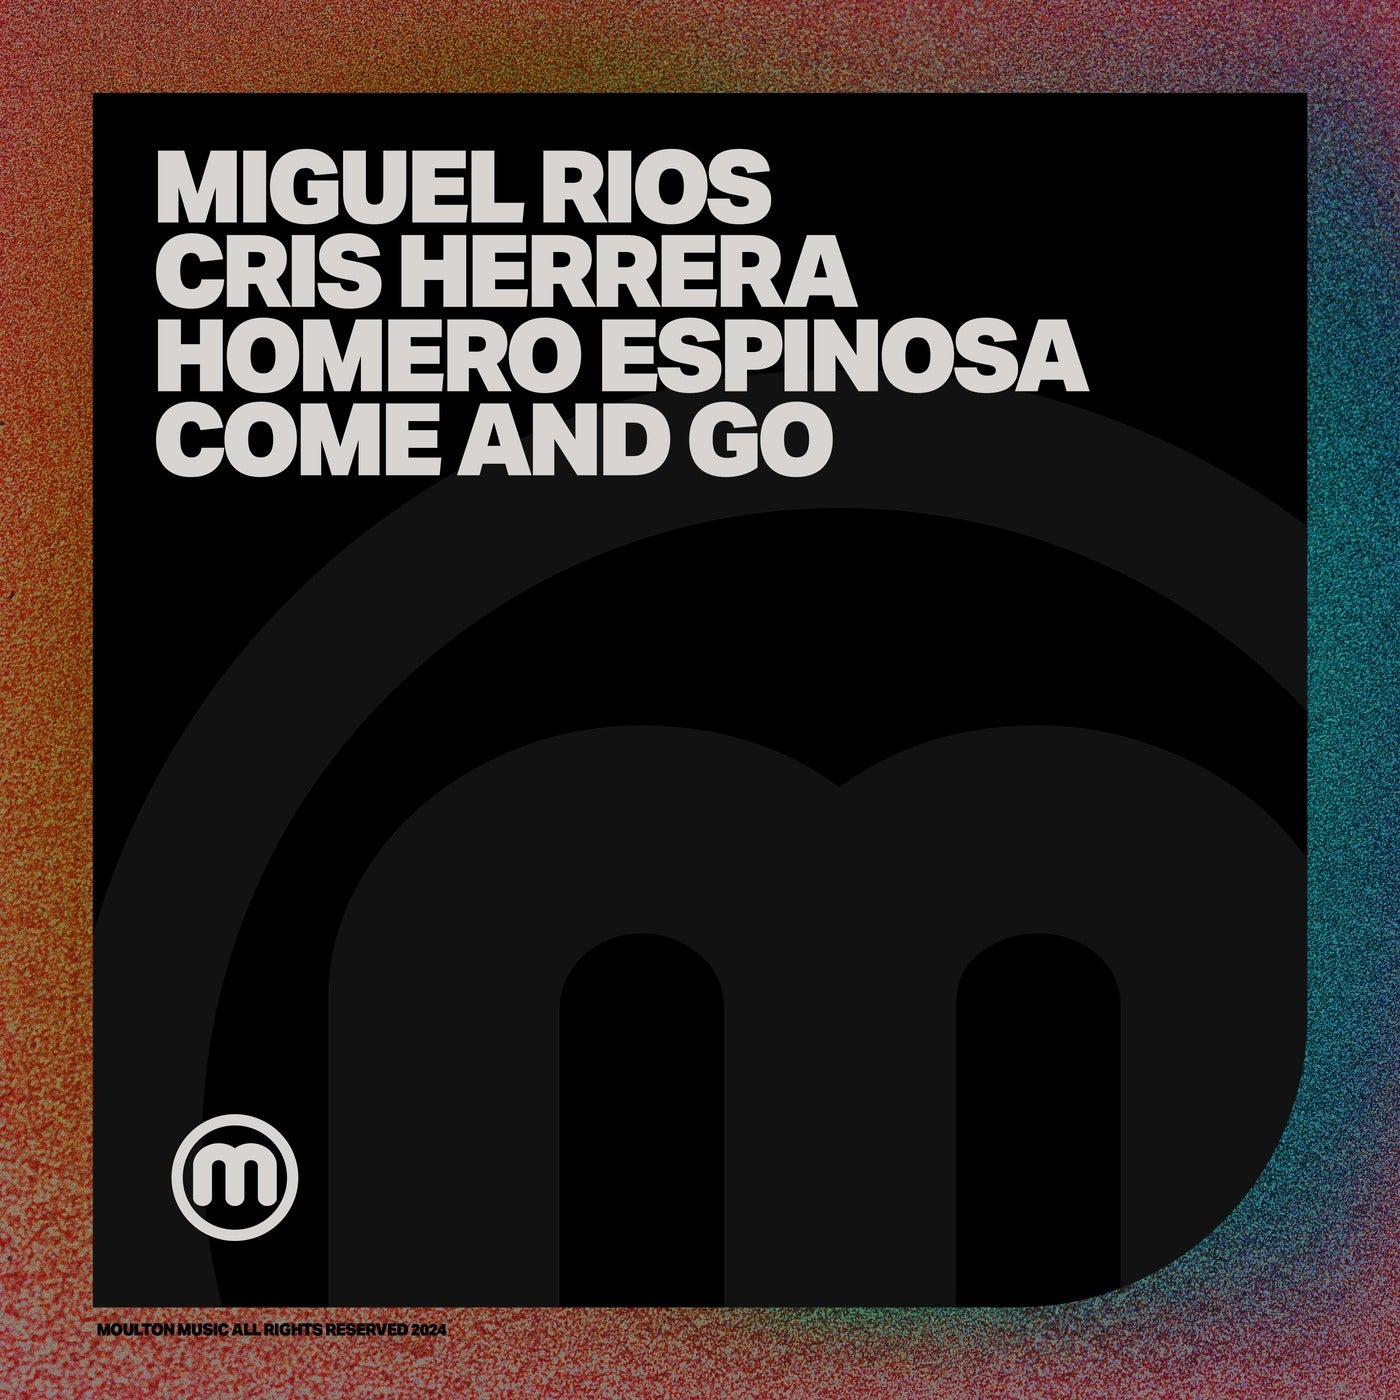 Cover - Homero Espinosa, Miguel Rios, Cris Herrera - Come and Go (Original Mix)